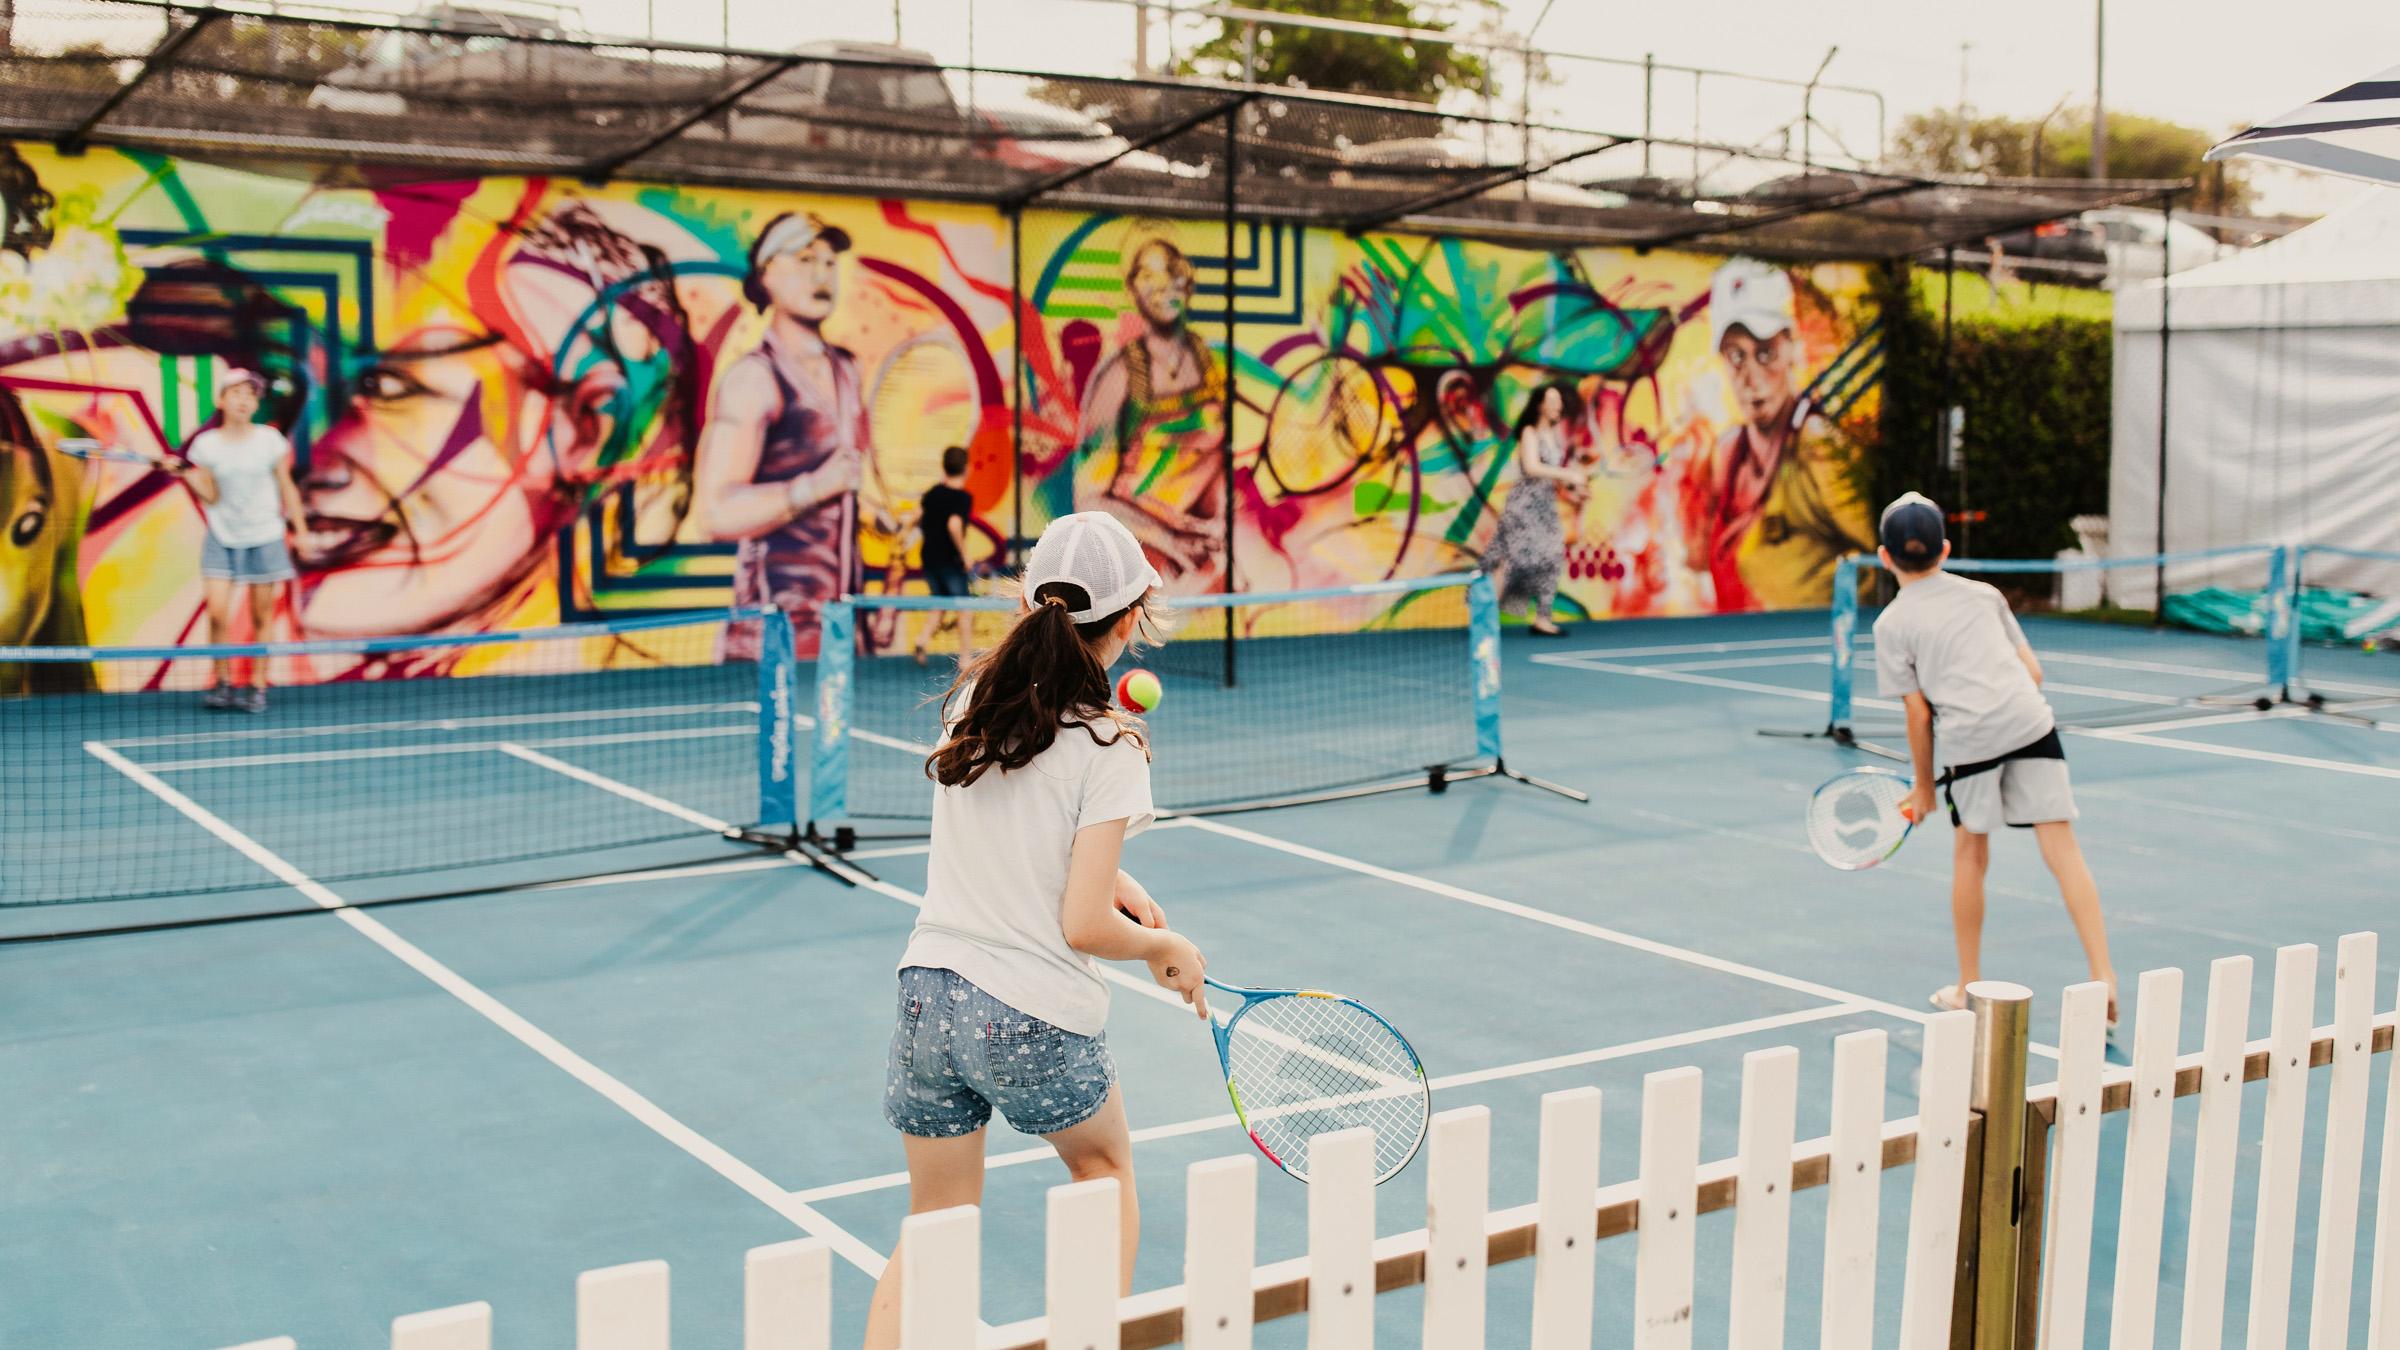 Four children playing tennis on a mini tennis court